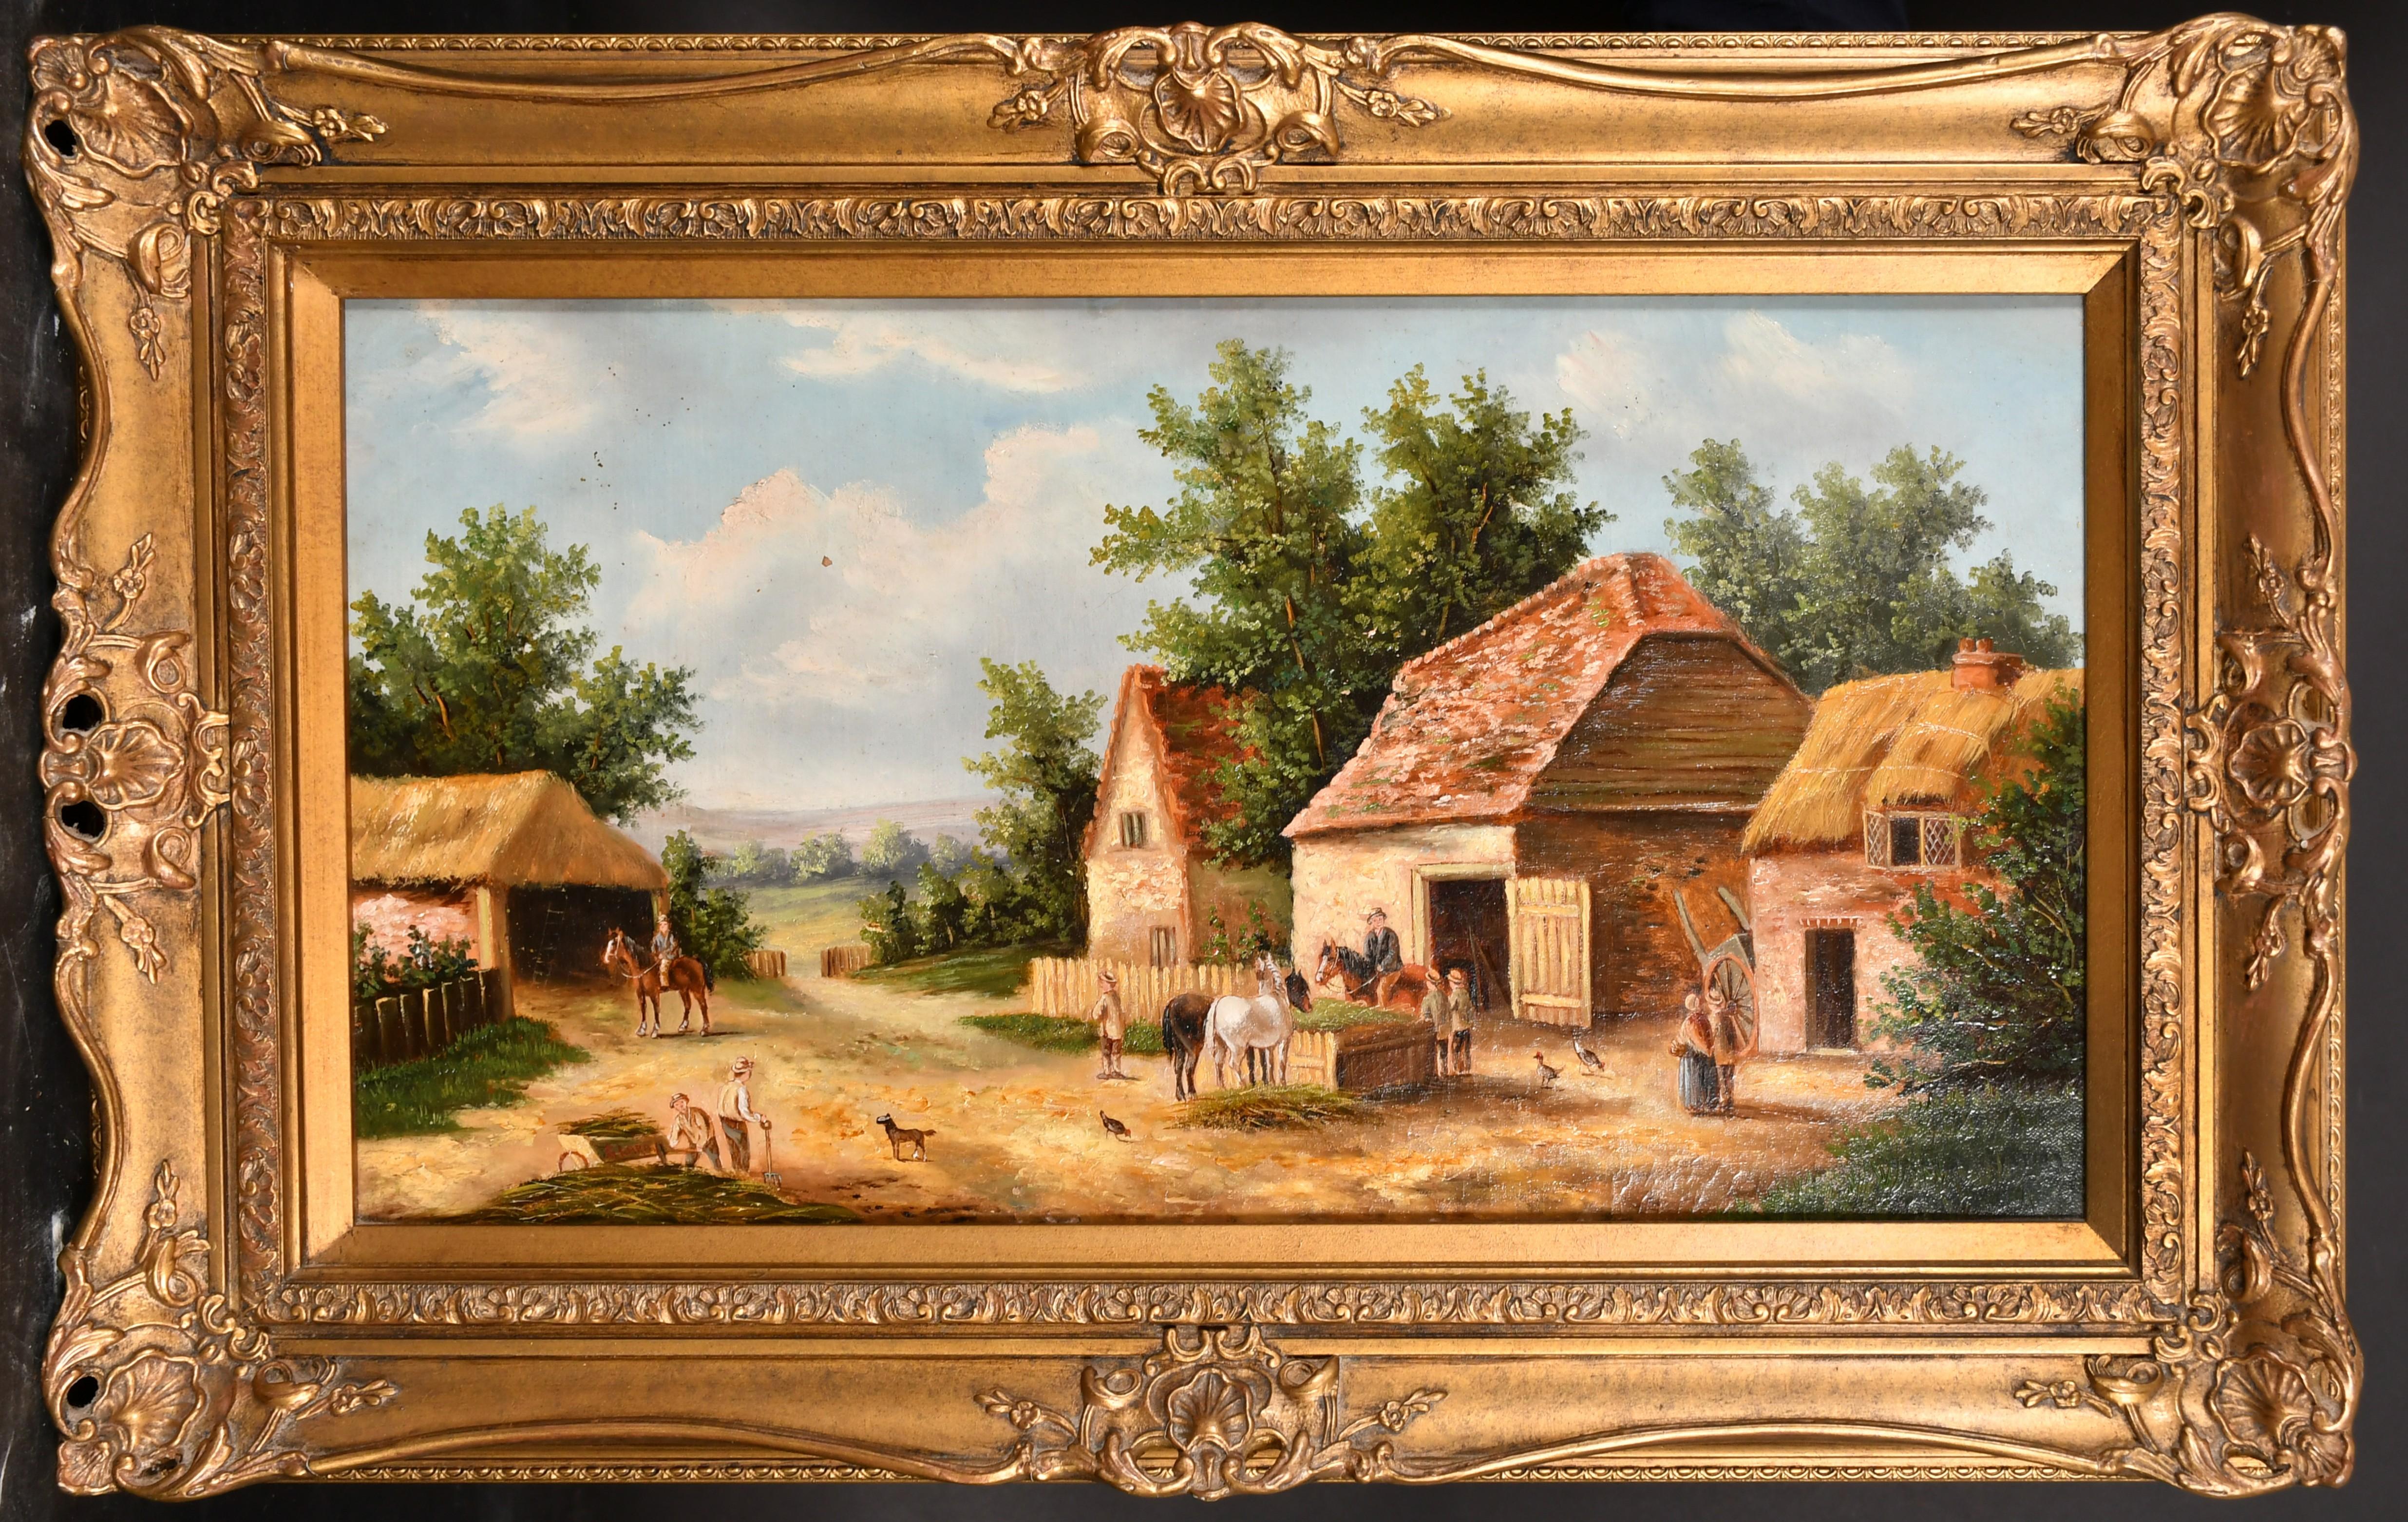 Animal Painting Georgina Lara - Georgina LARA Peinture à l'huile du 19e siècle paysage scène de ferme